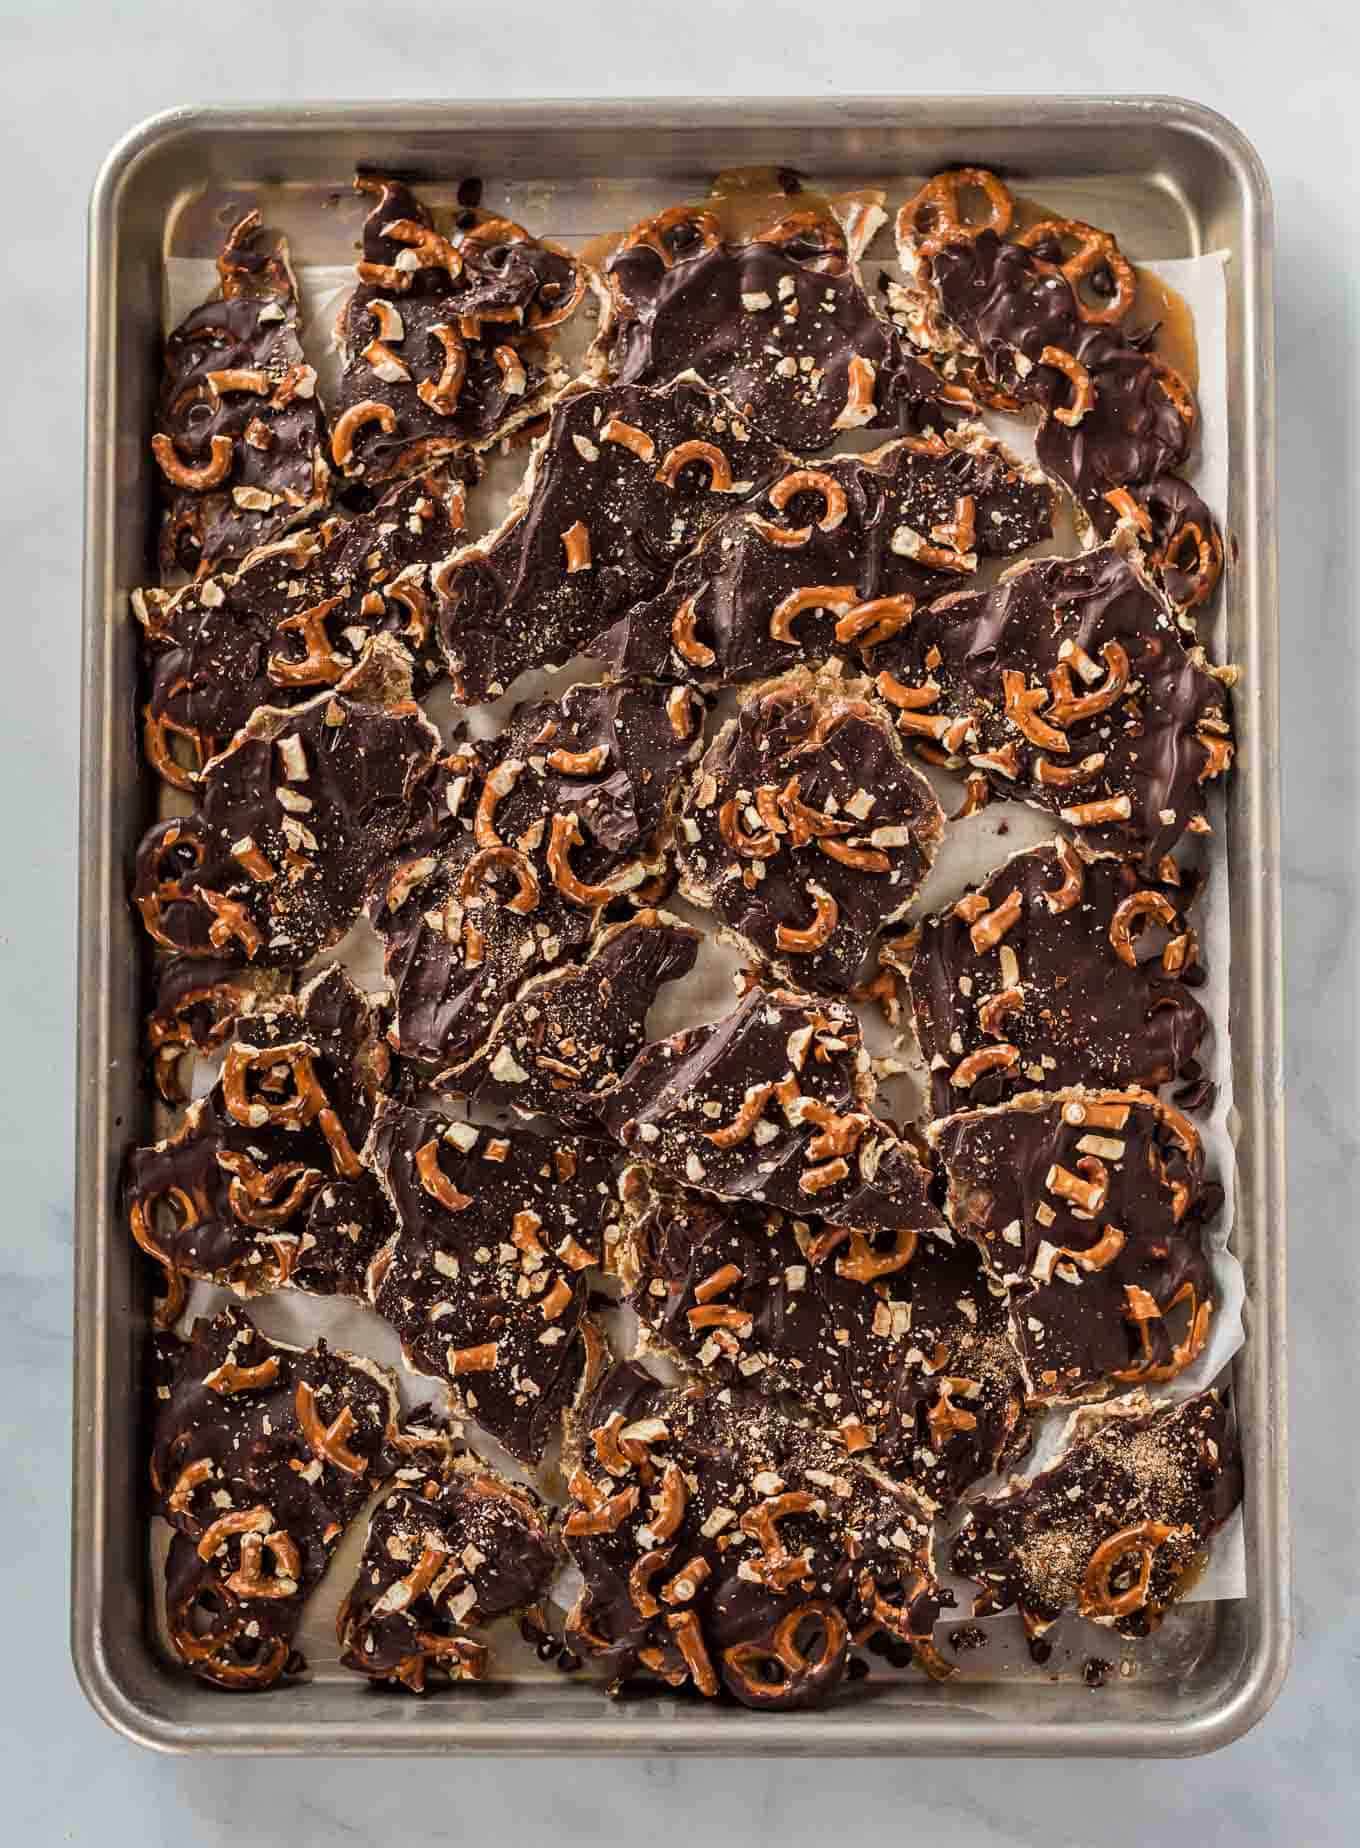 the finished chocolate caramel pretzel bars broken up on the baking sheet